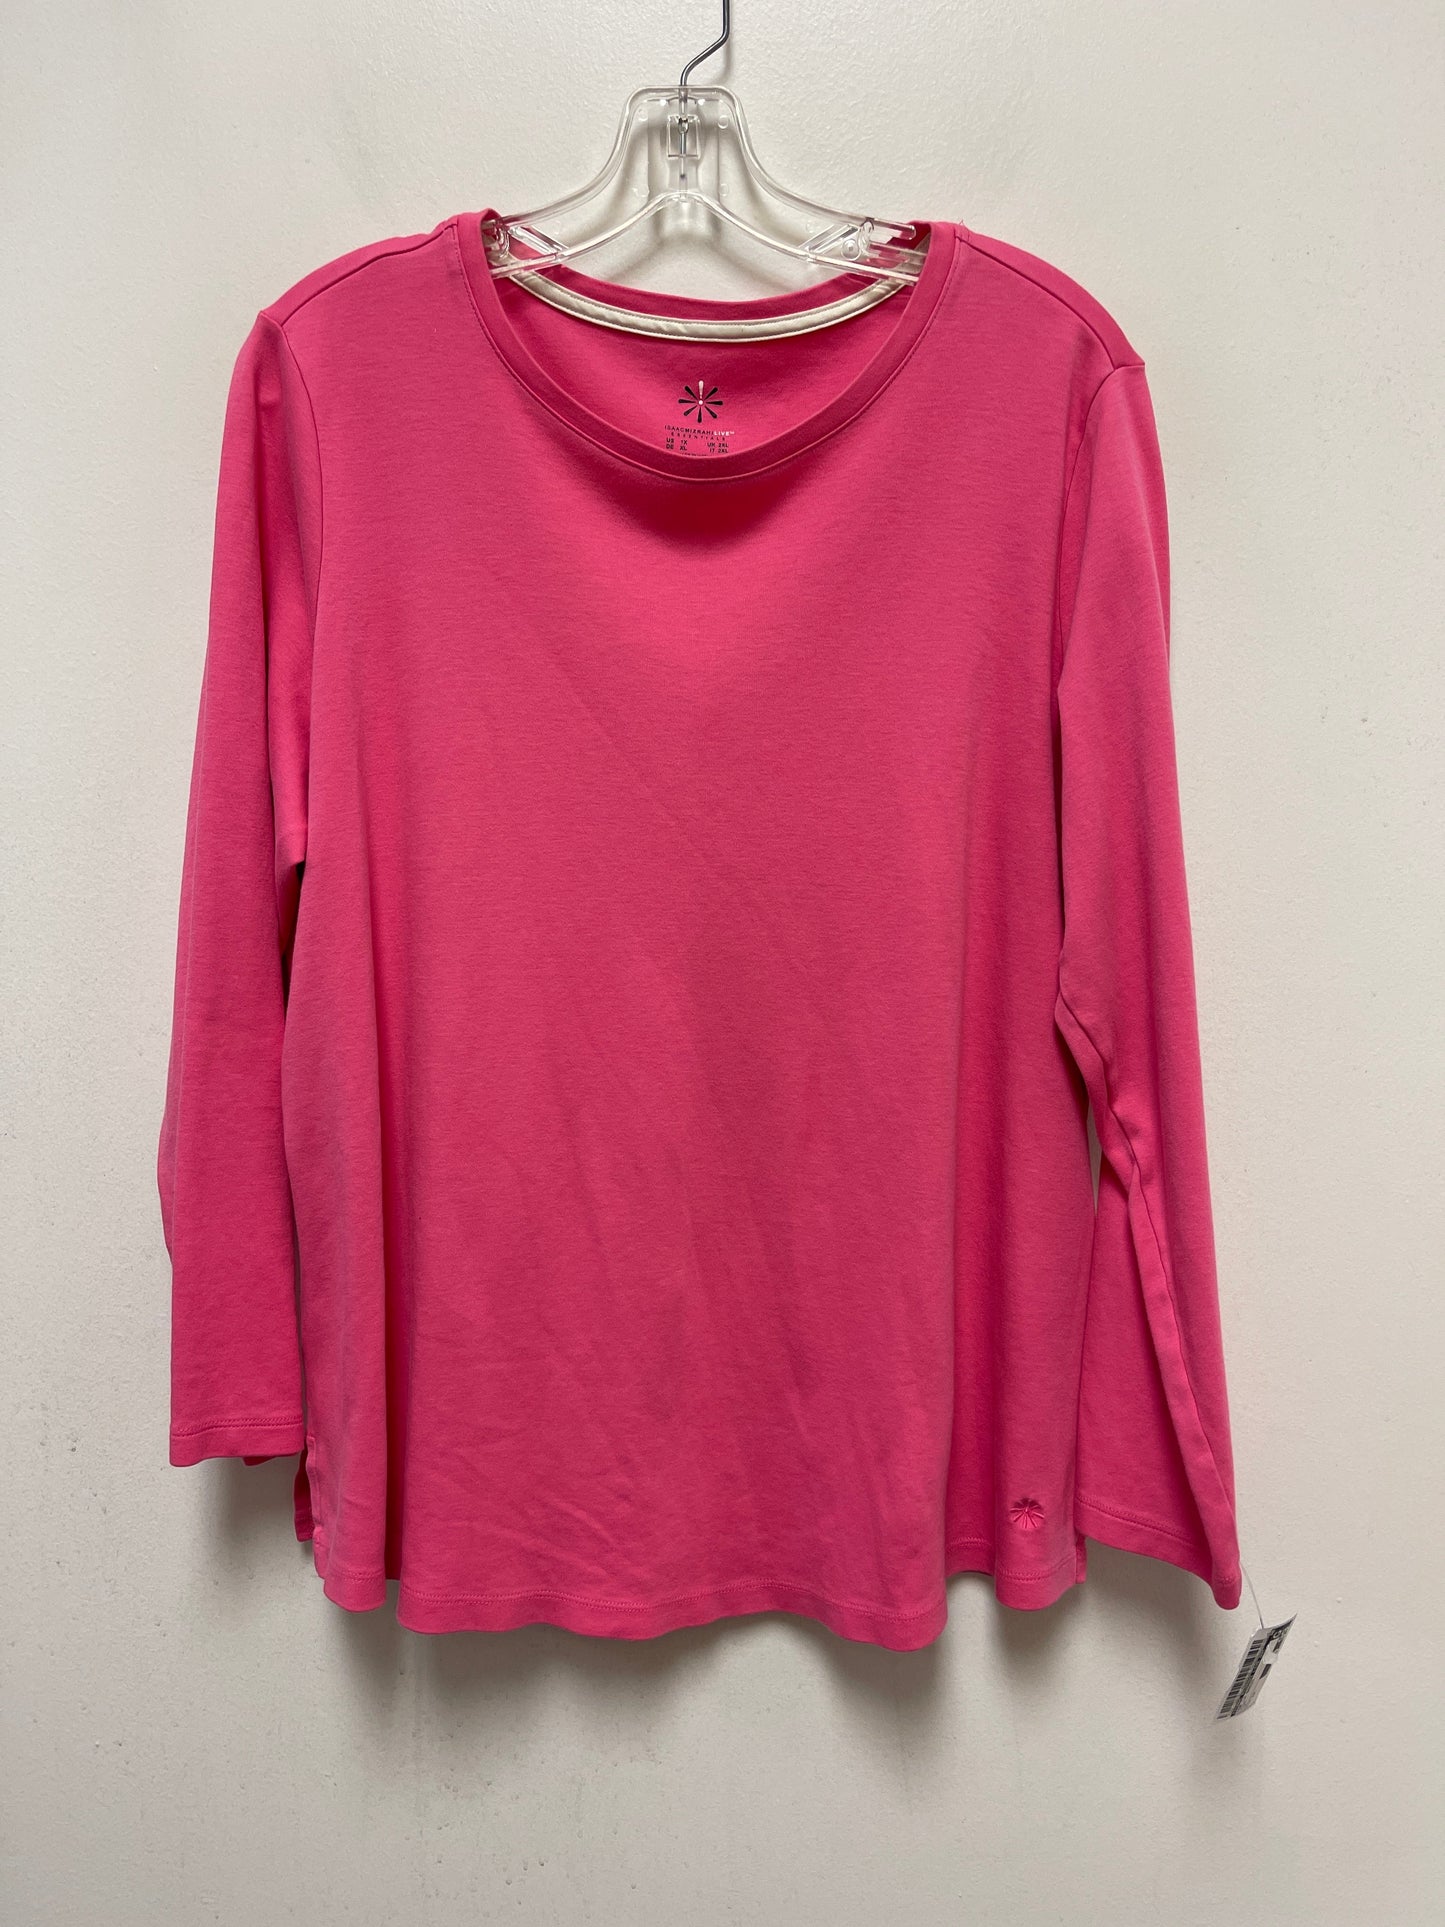 Pink Top Long Sleeve Basic Isaac Mizrahi Live Qvc, Size 1x